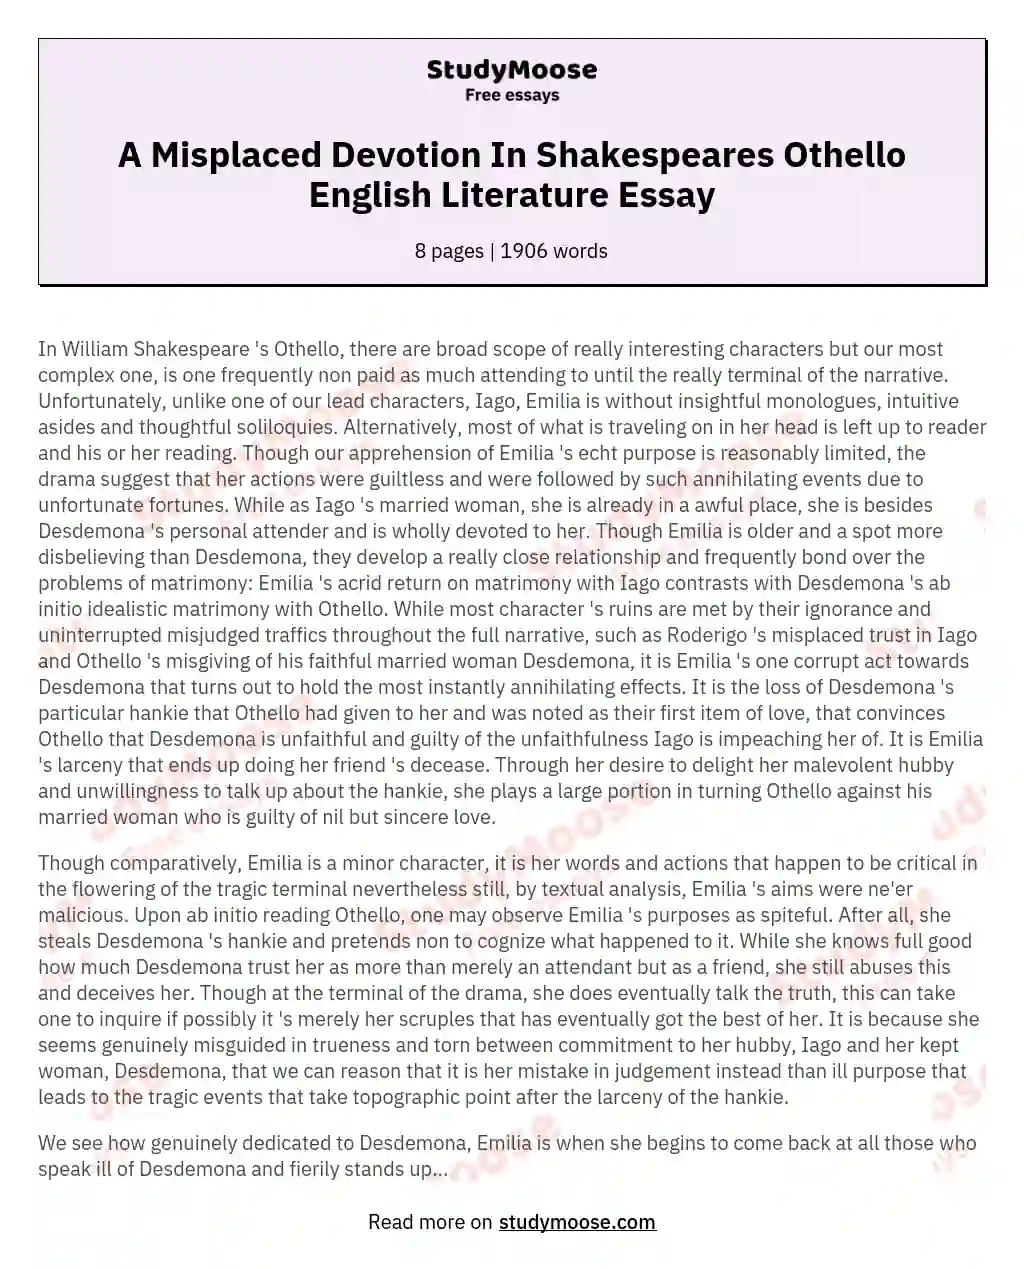 A Misplaced Devotion In Shakespeares Othello English Literature Essay essay